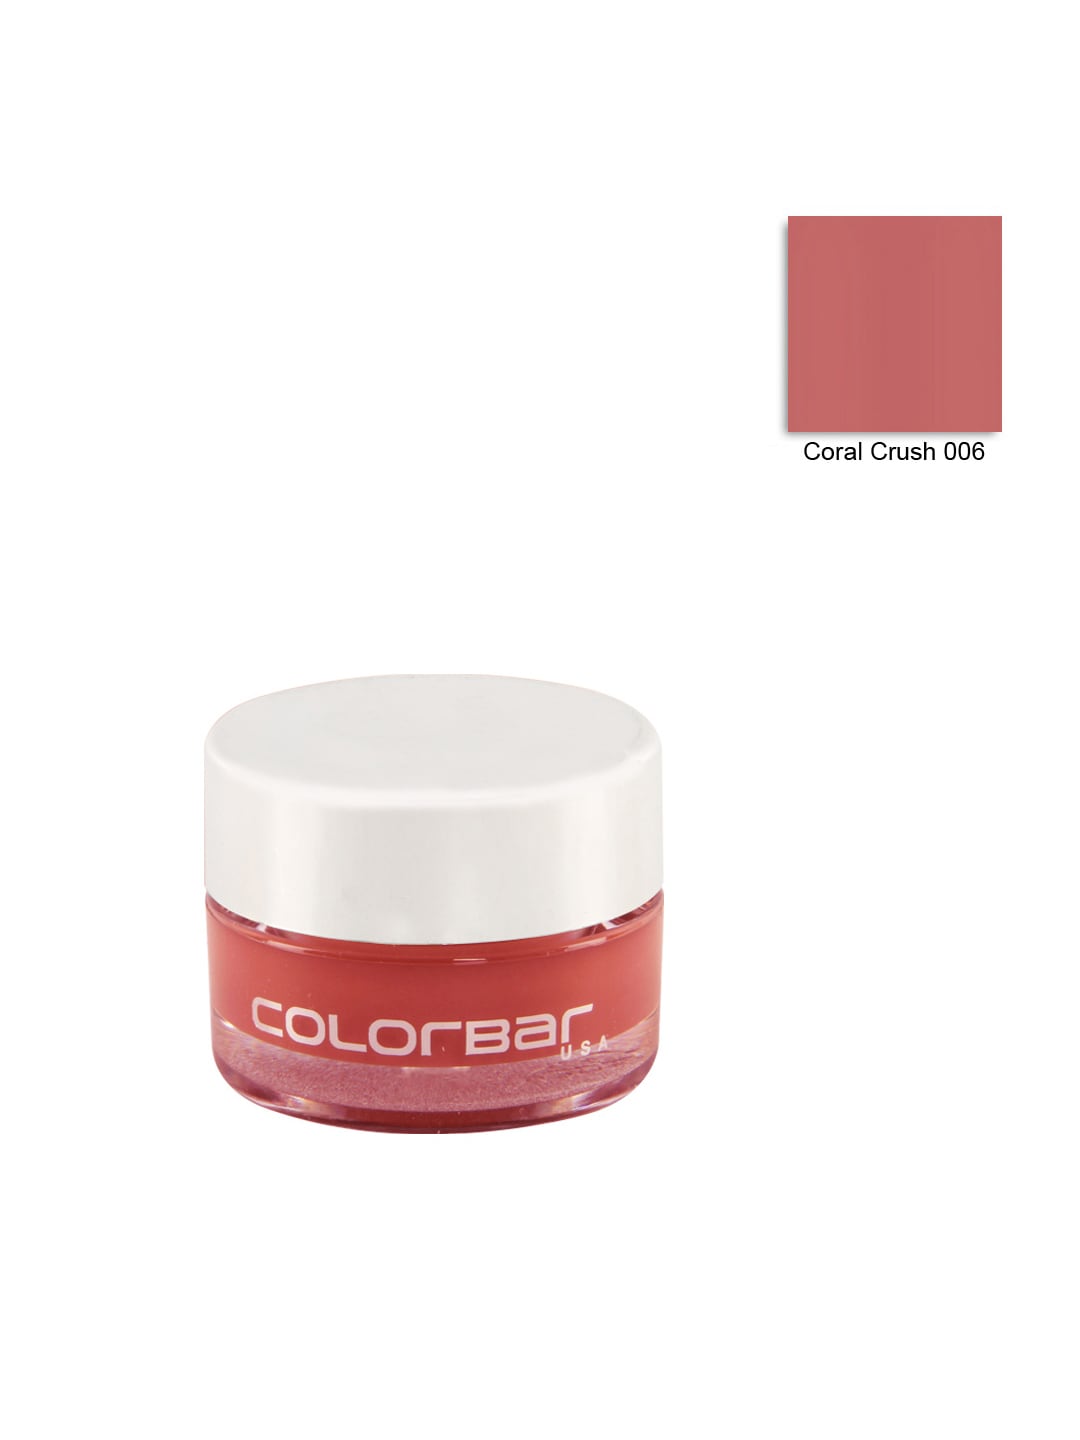 Colorbar Coral Crush Lip Pot 006